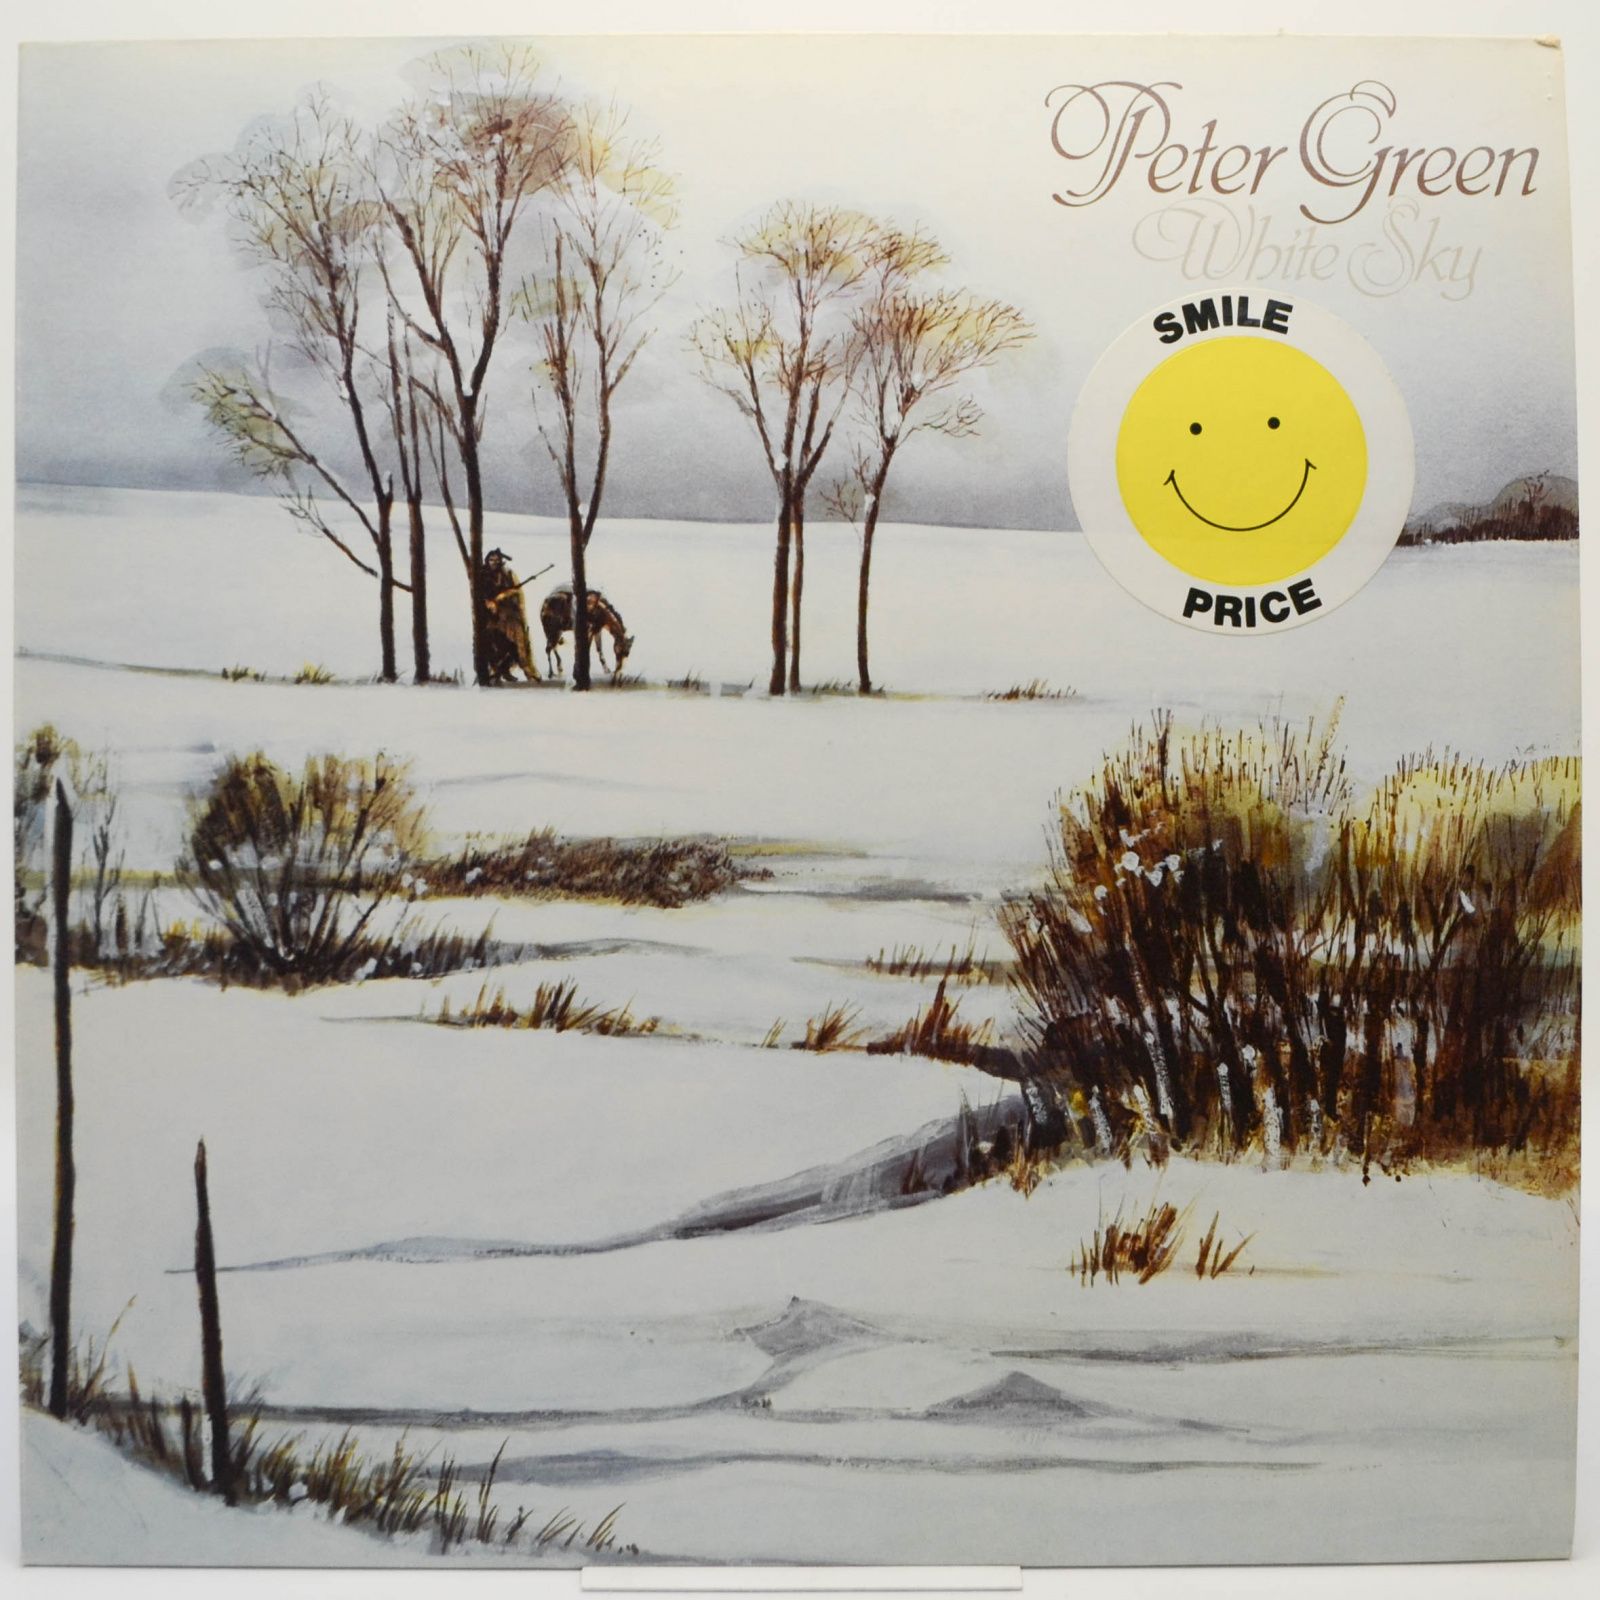 Peter Green — White Sky, 1982